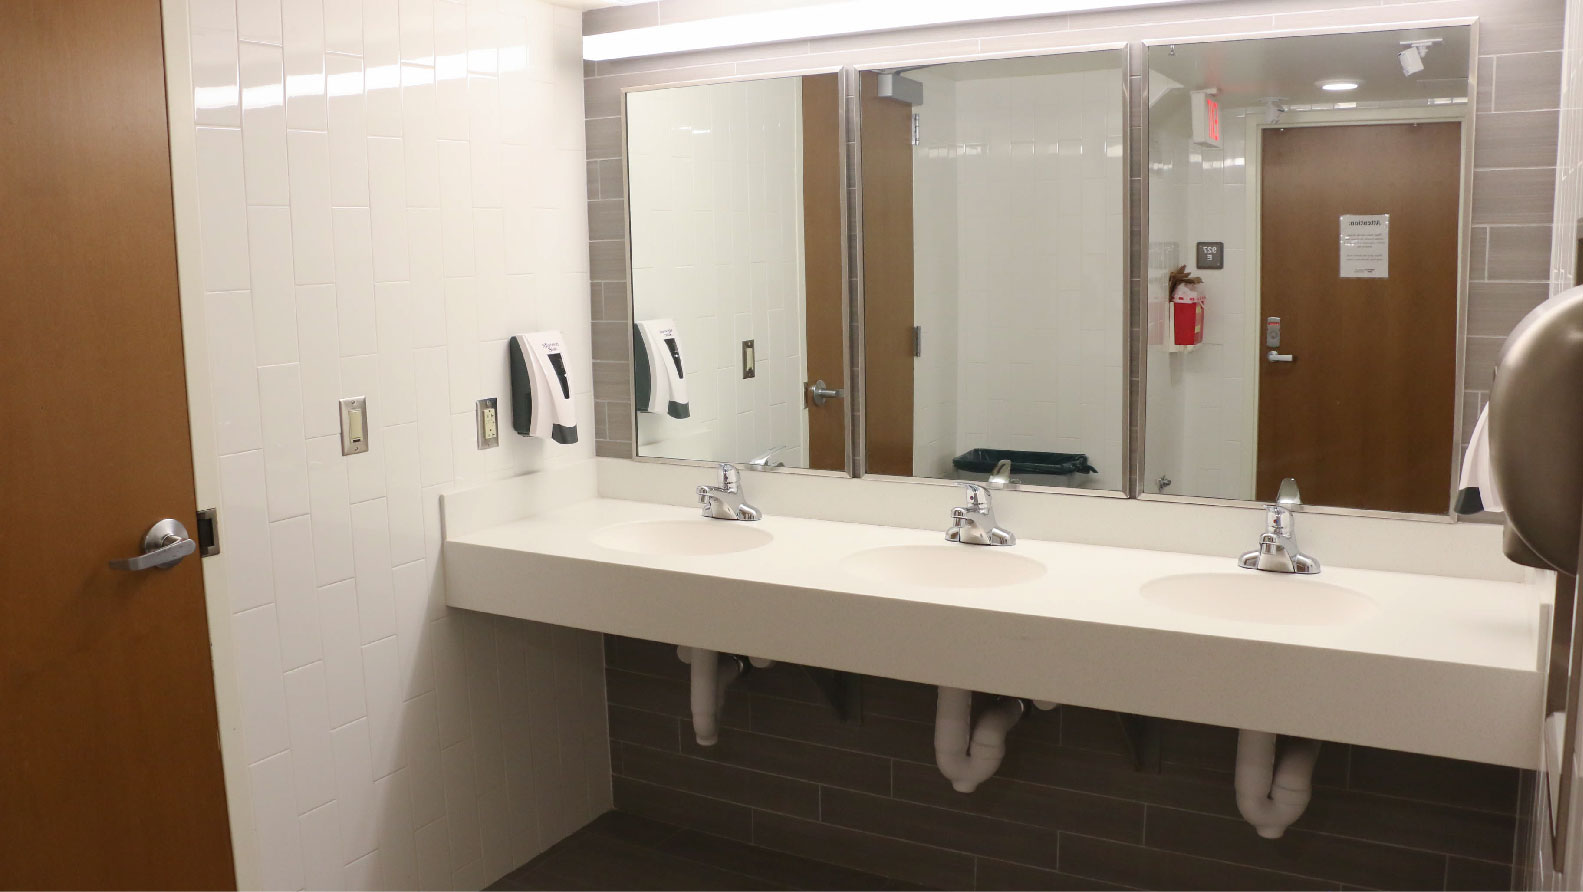 Woods Single user private bathroom sinks